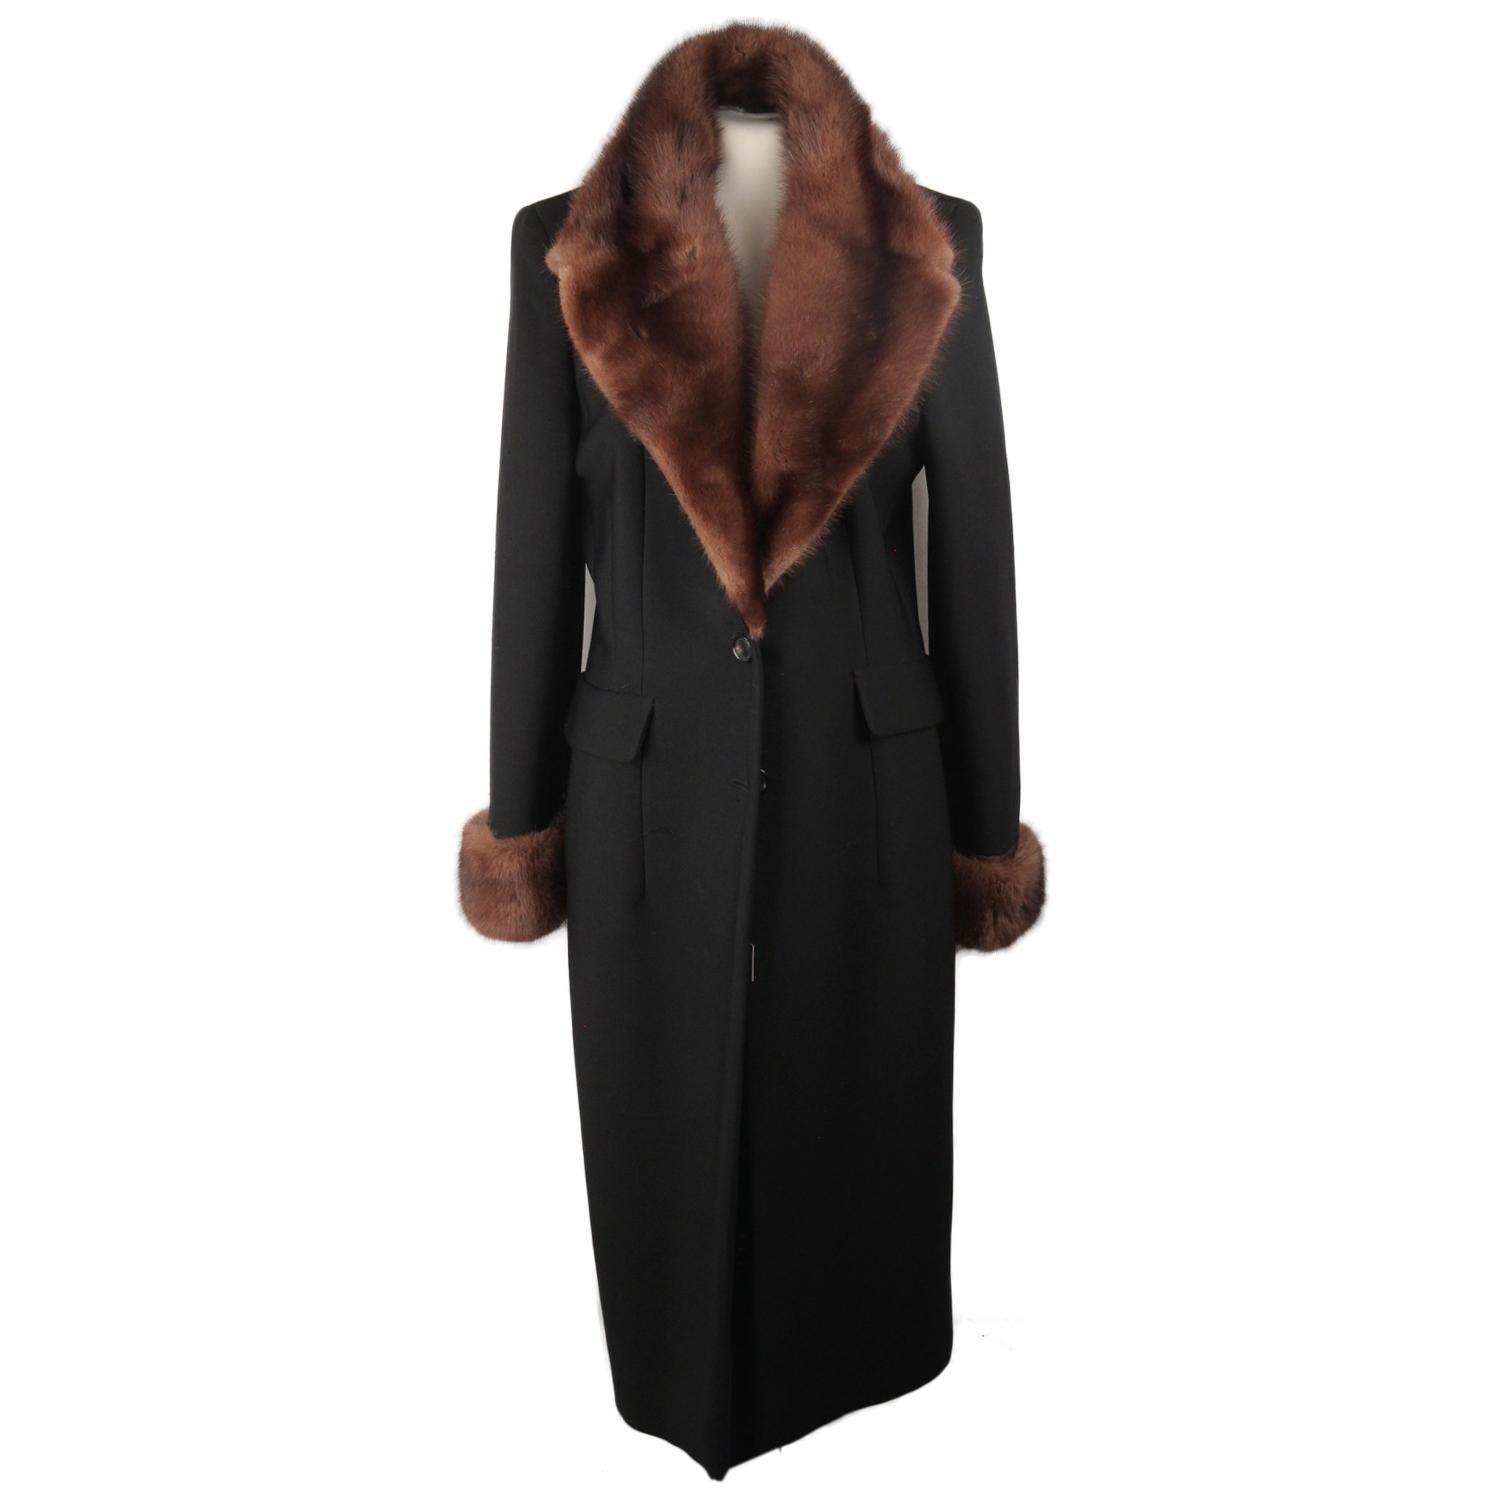 Les Copains Black Wool Tailored Coat with Mink Fur Trim Size 44